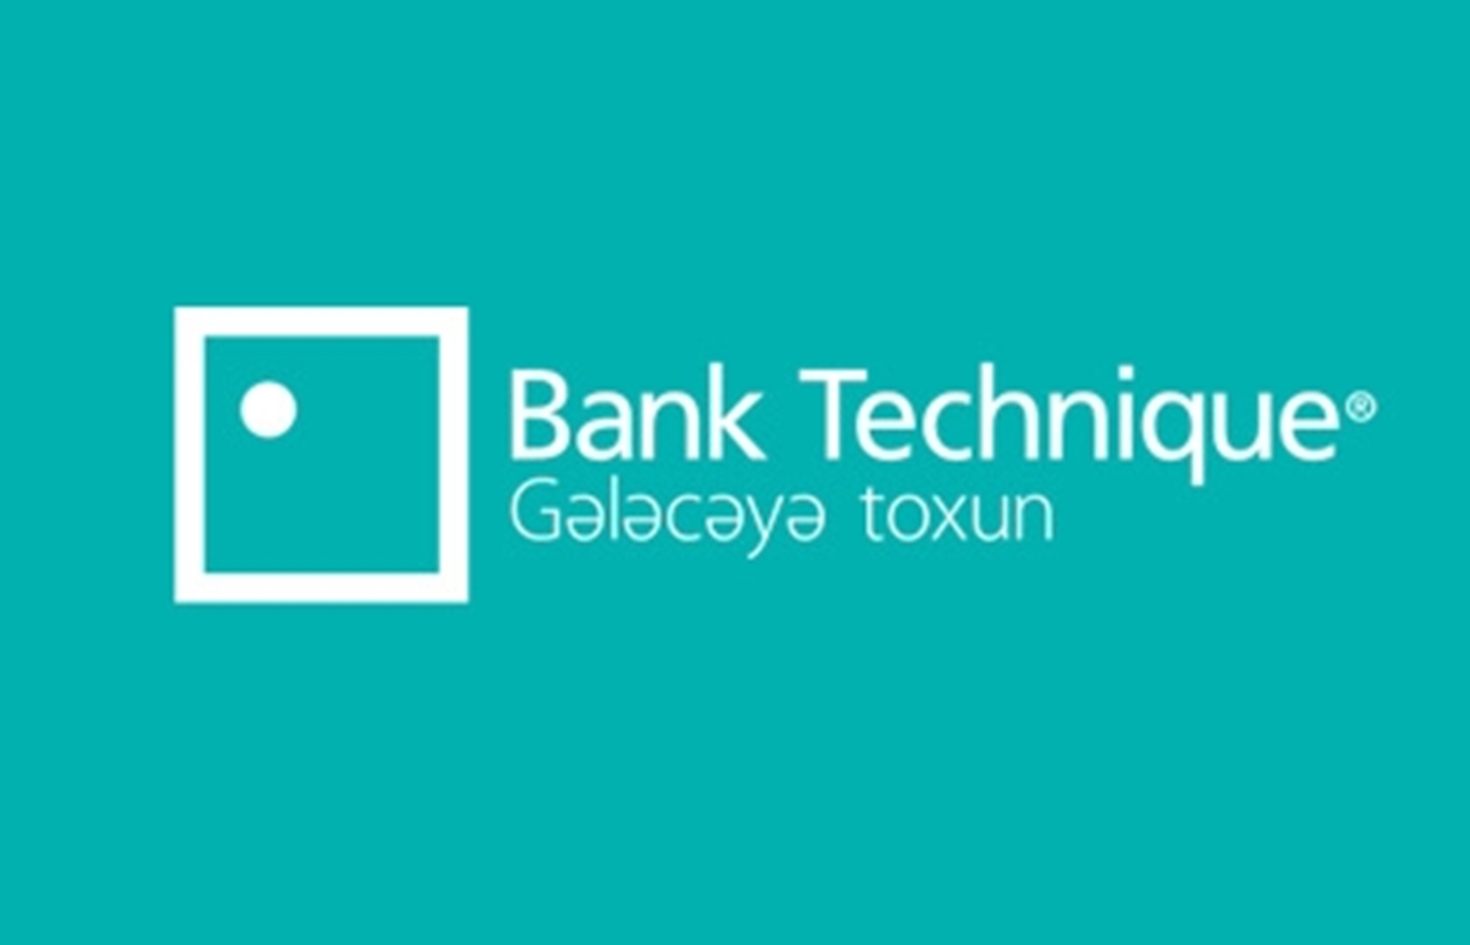  “Bank Technique”  ixtisarlara başlayıb